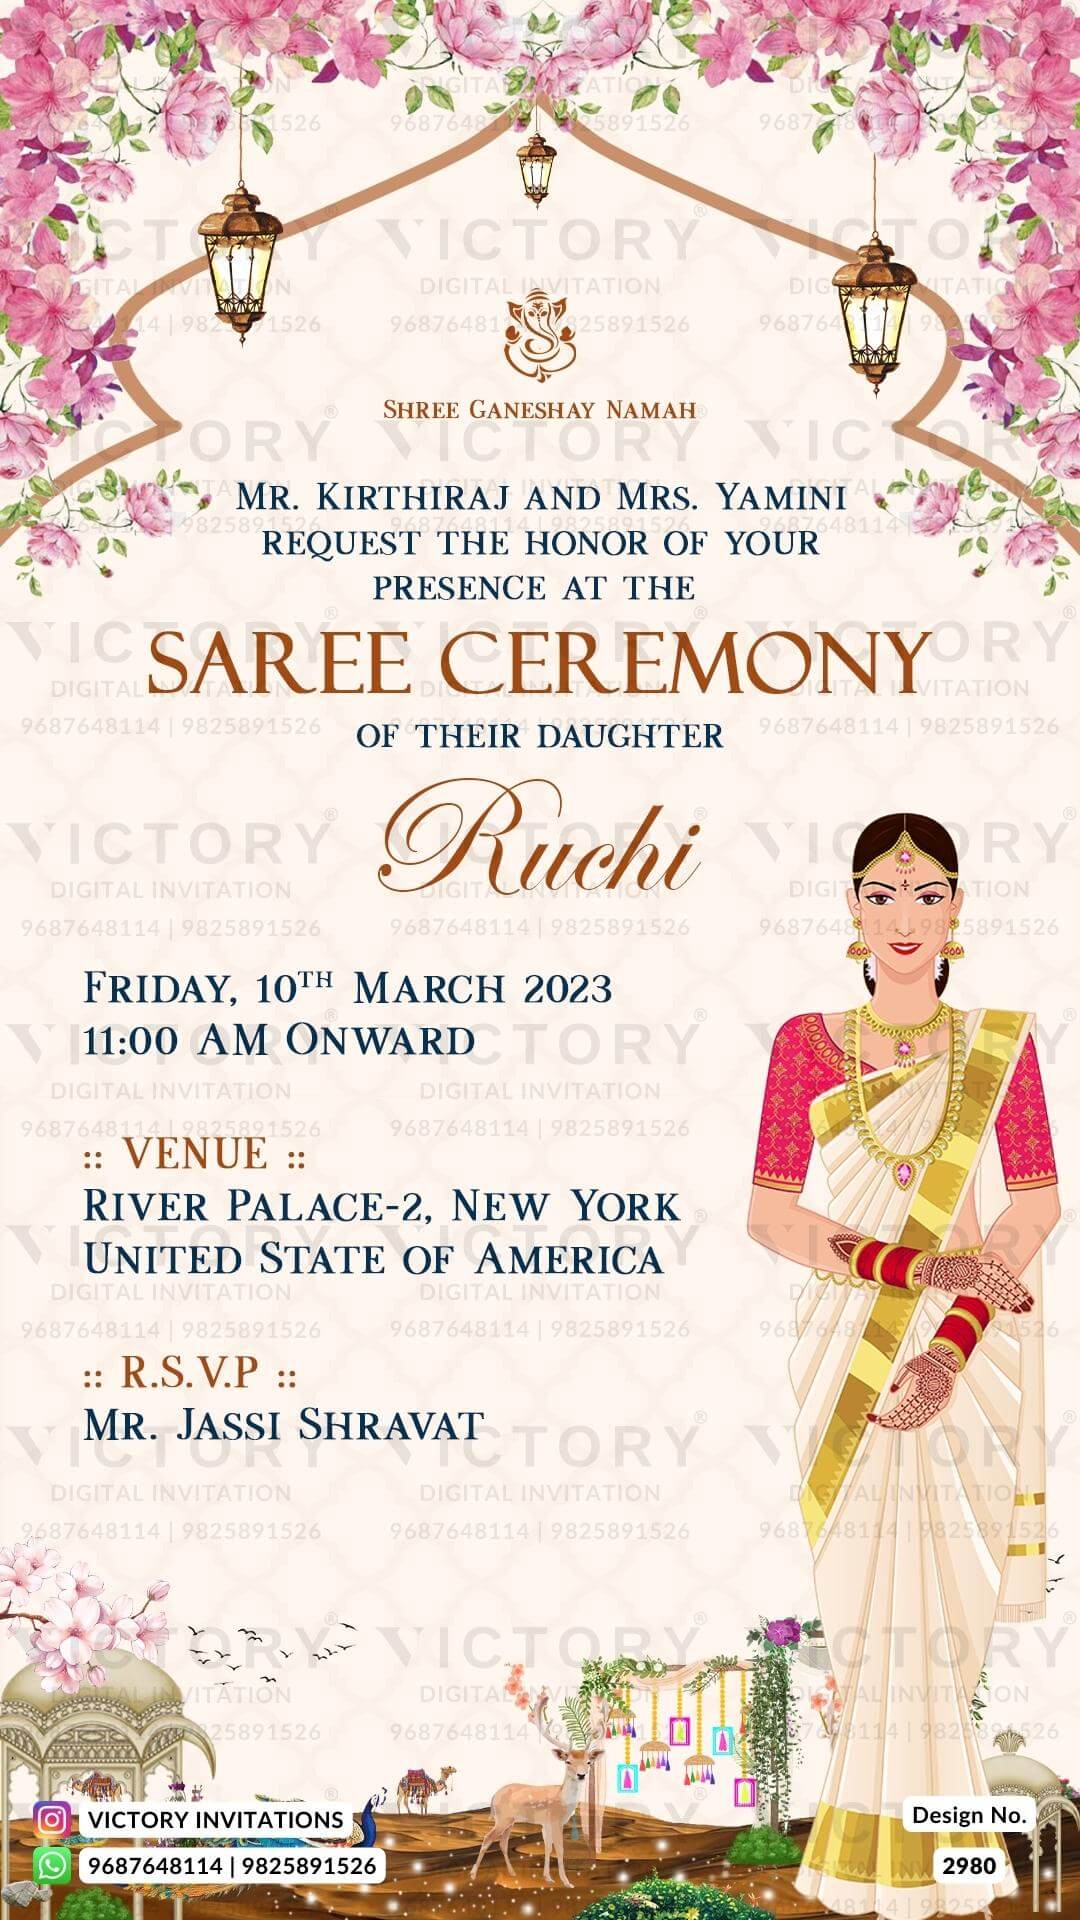 Half Saree Ceremony digital invitation card design no.2980